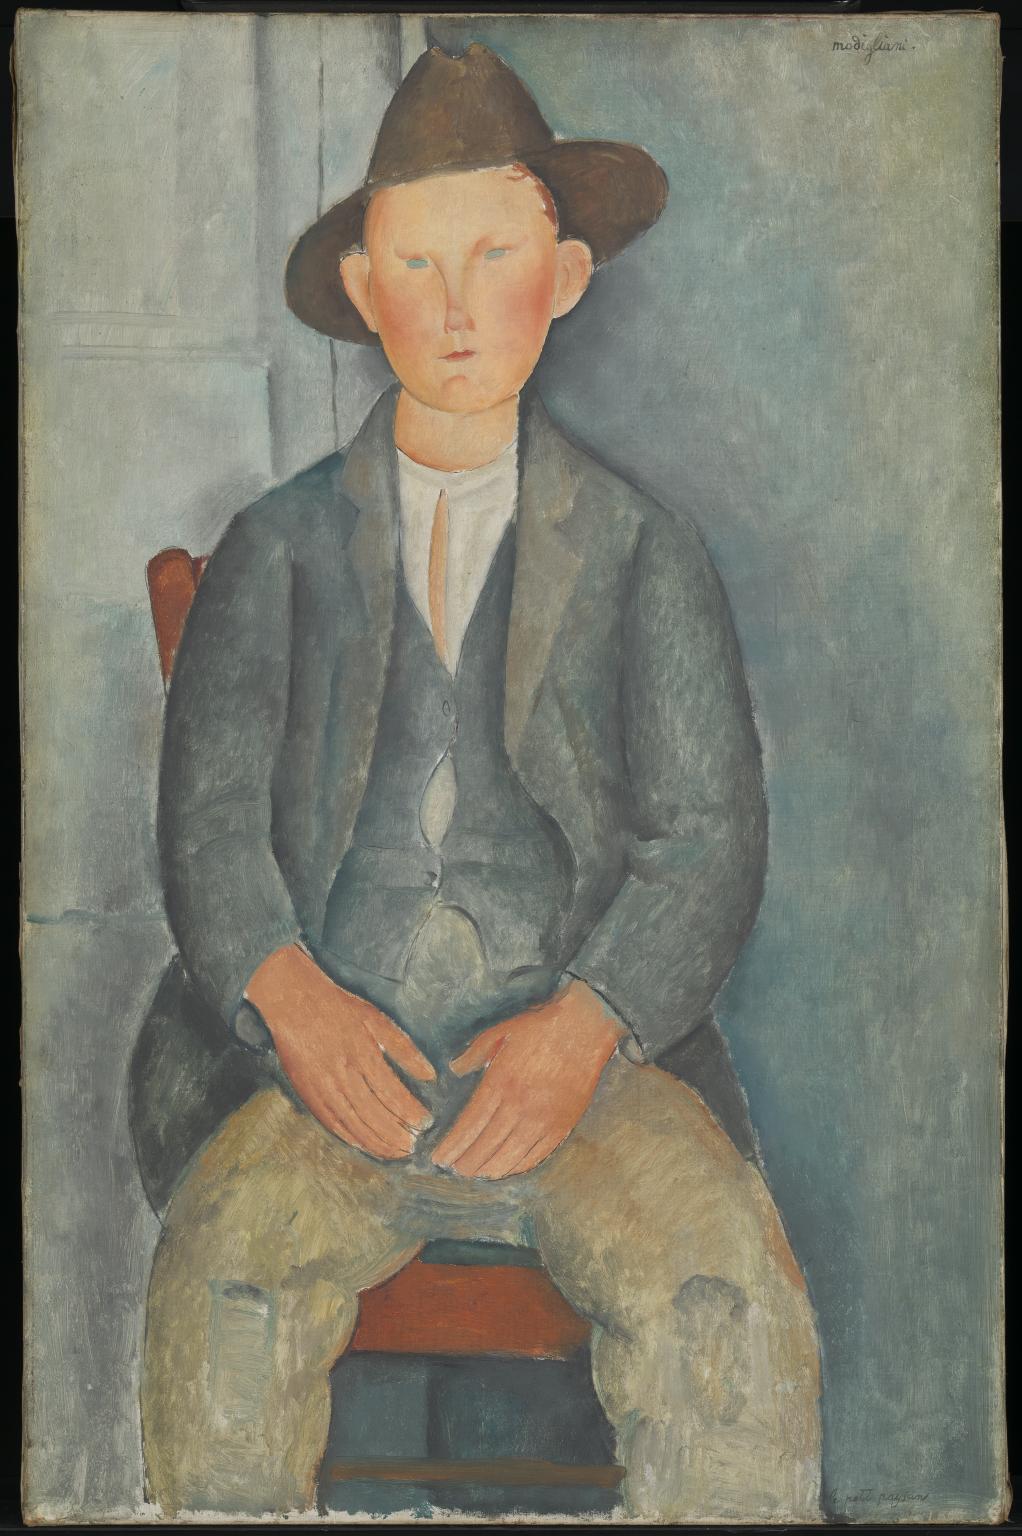 Amedeo ModiglianiThe Little Peasantc. 1918 Tate Photo © Tate